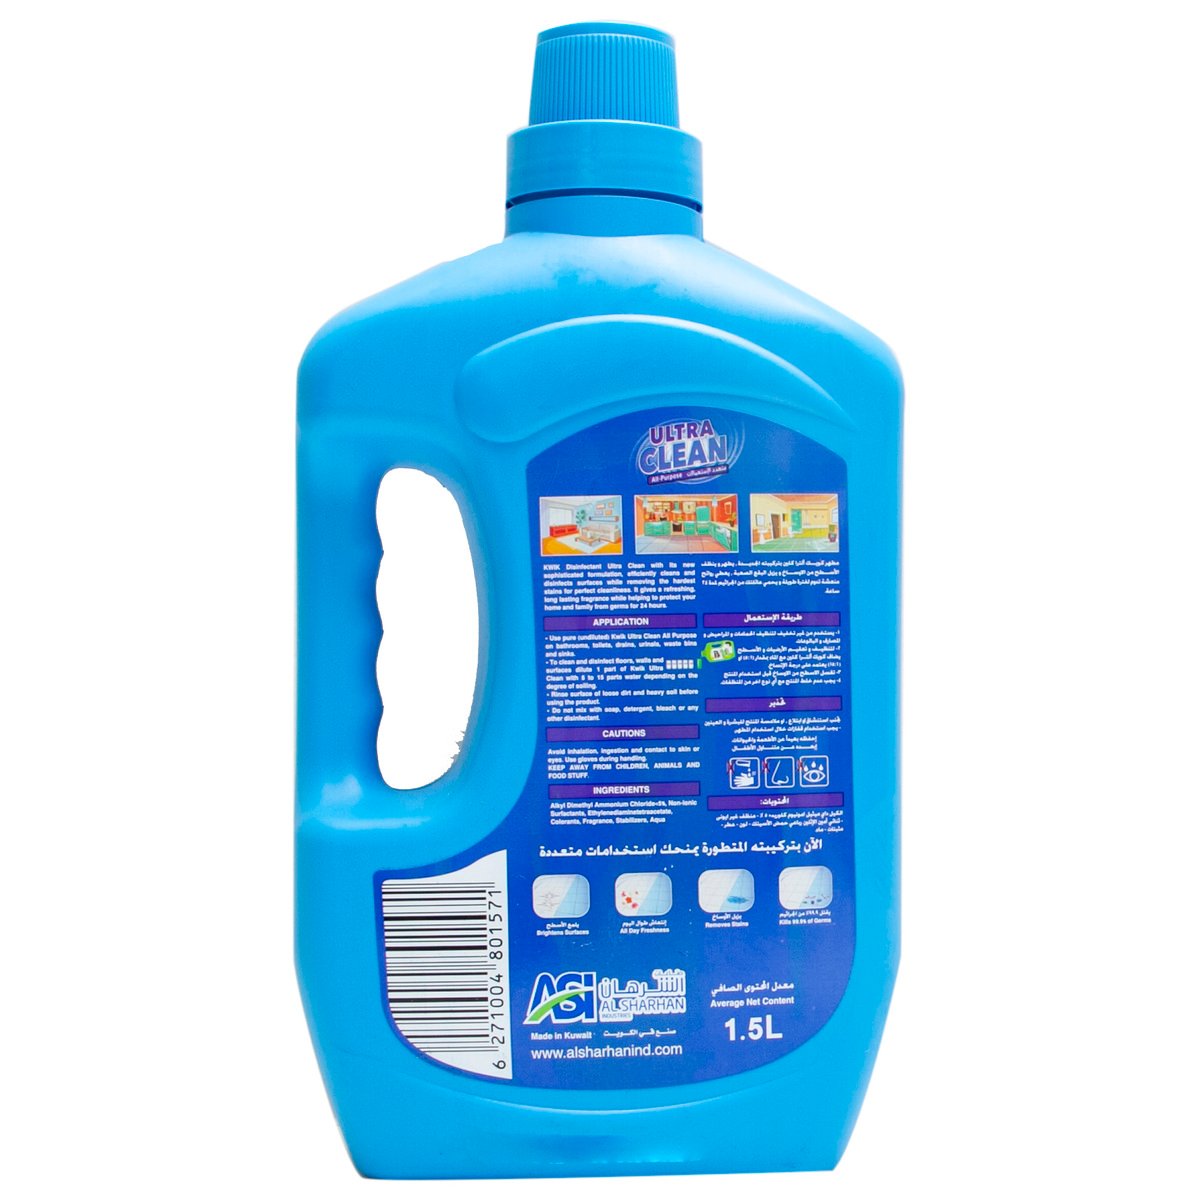 Kwik Shine All Purpose Desinfectant Ultra Clean Aqua 1.5Litre